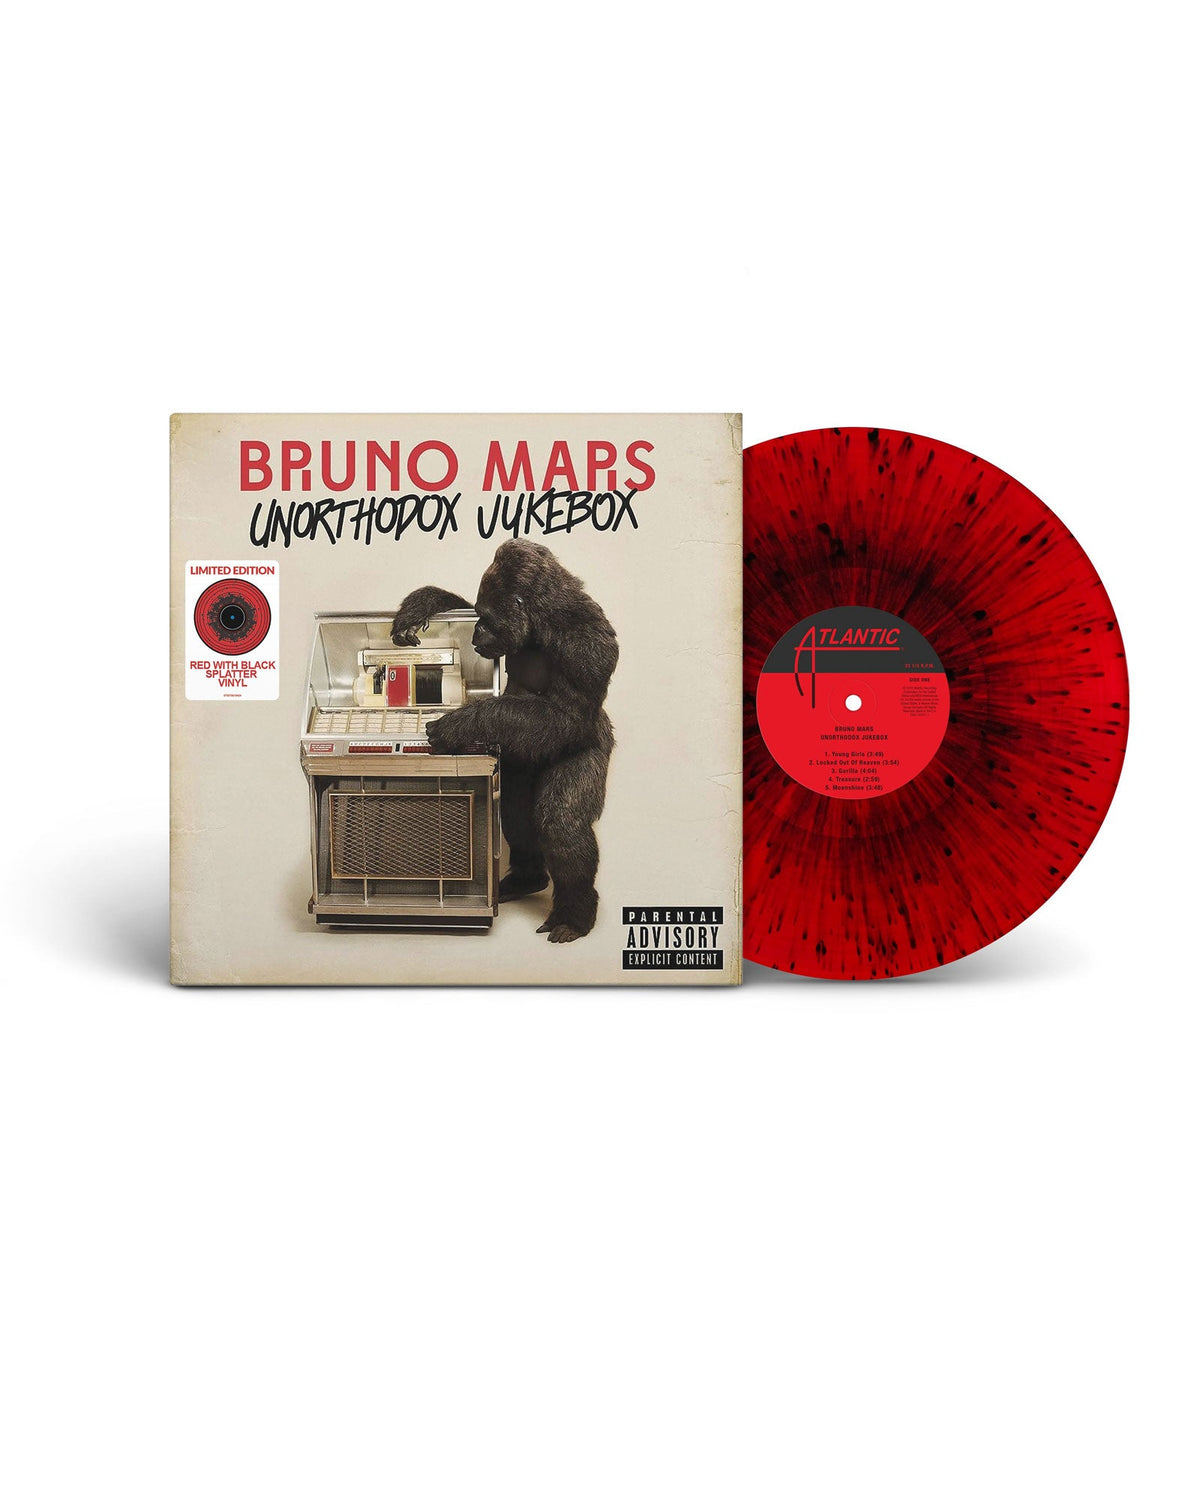 Bruno Mars - LP Vinilo Rojo "Unorthodox Jukebox" - D2fy · Rocktud - D2fy